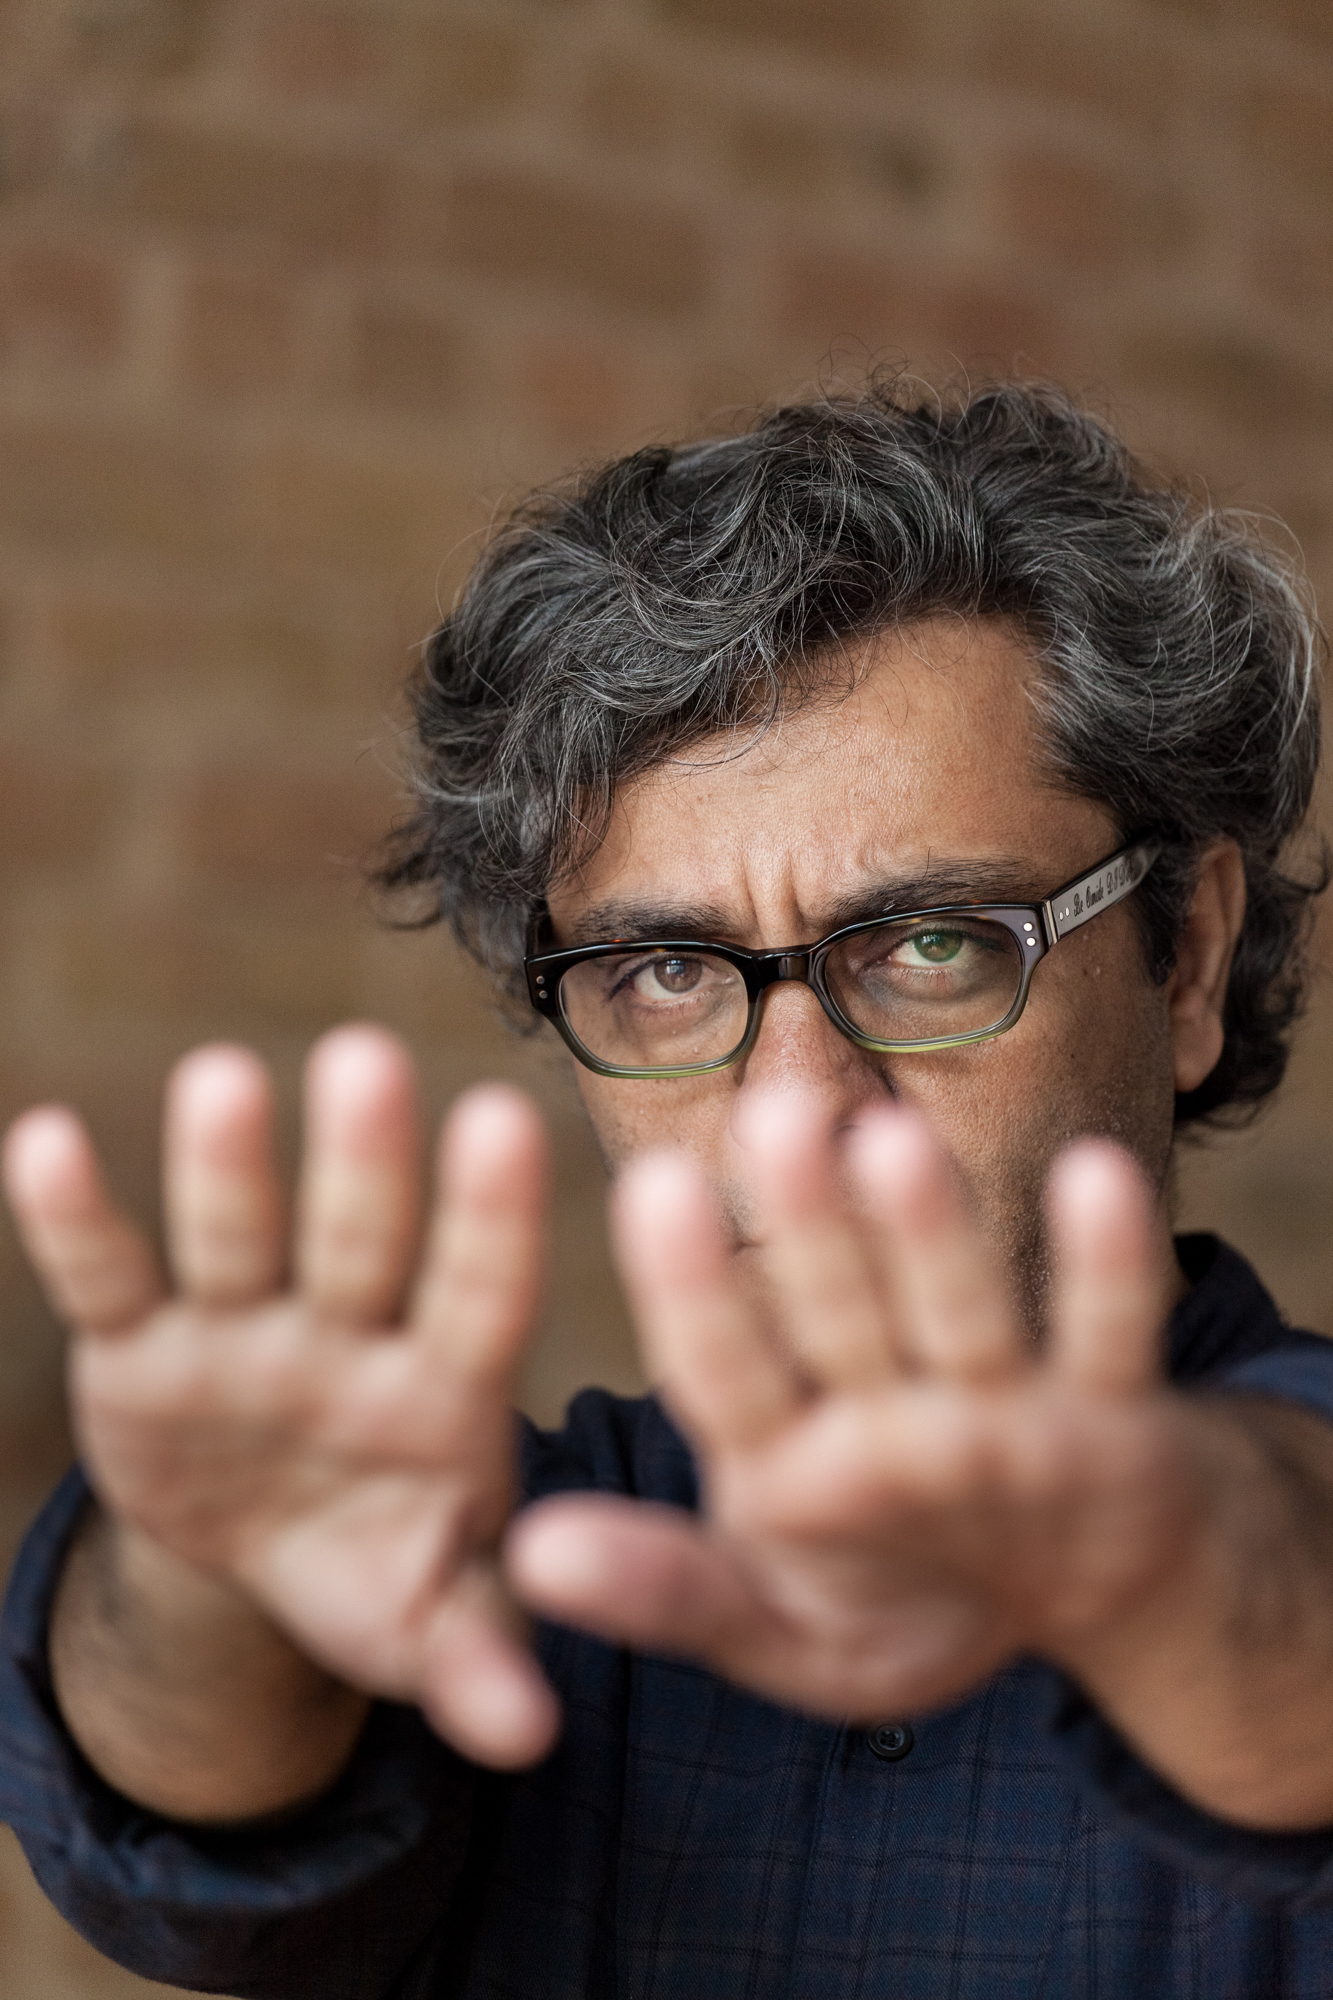 Filmmaker Mohammad Rasulof Rasoulof from Iran (2015, die taz)